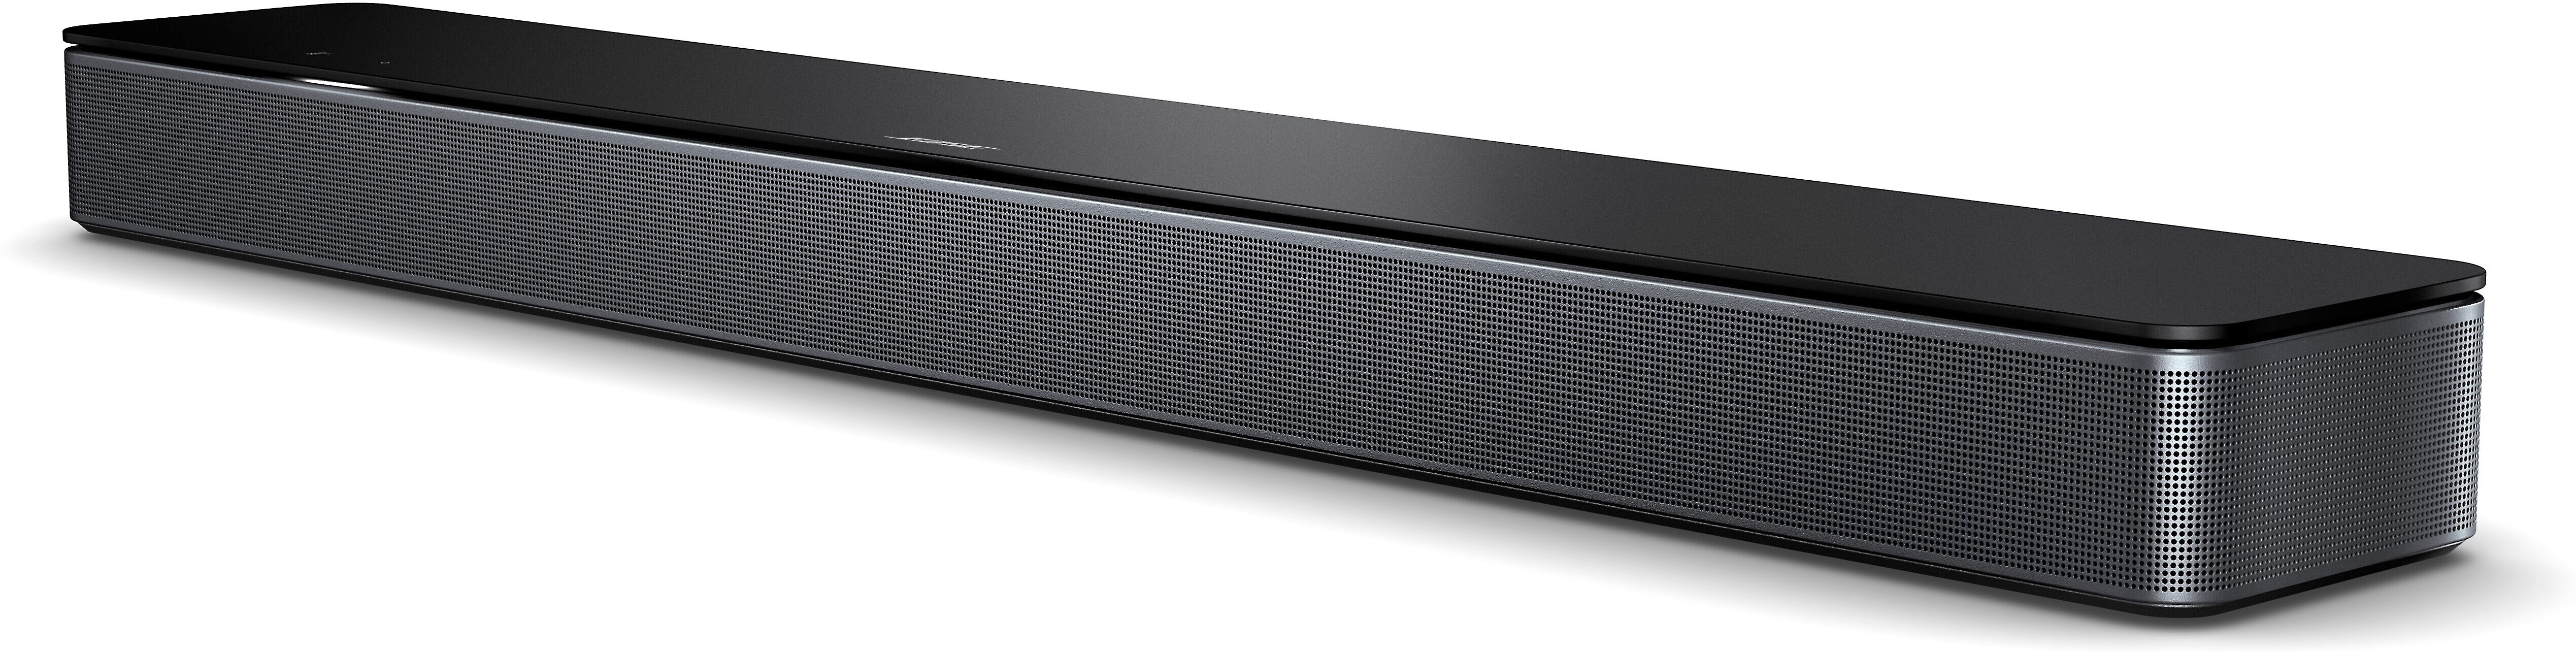 Bose® Smart Soundbar 300 Powered sound bar with built-in Wi-Fi